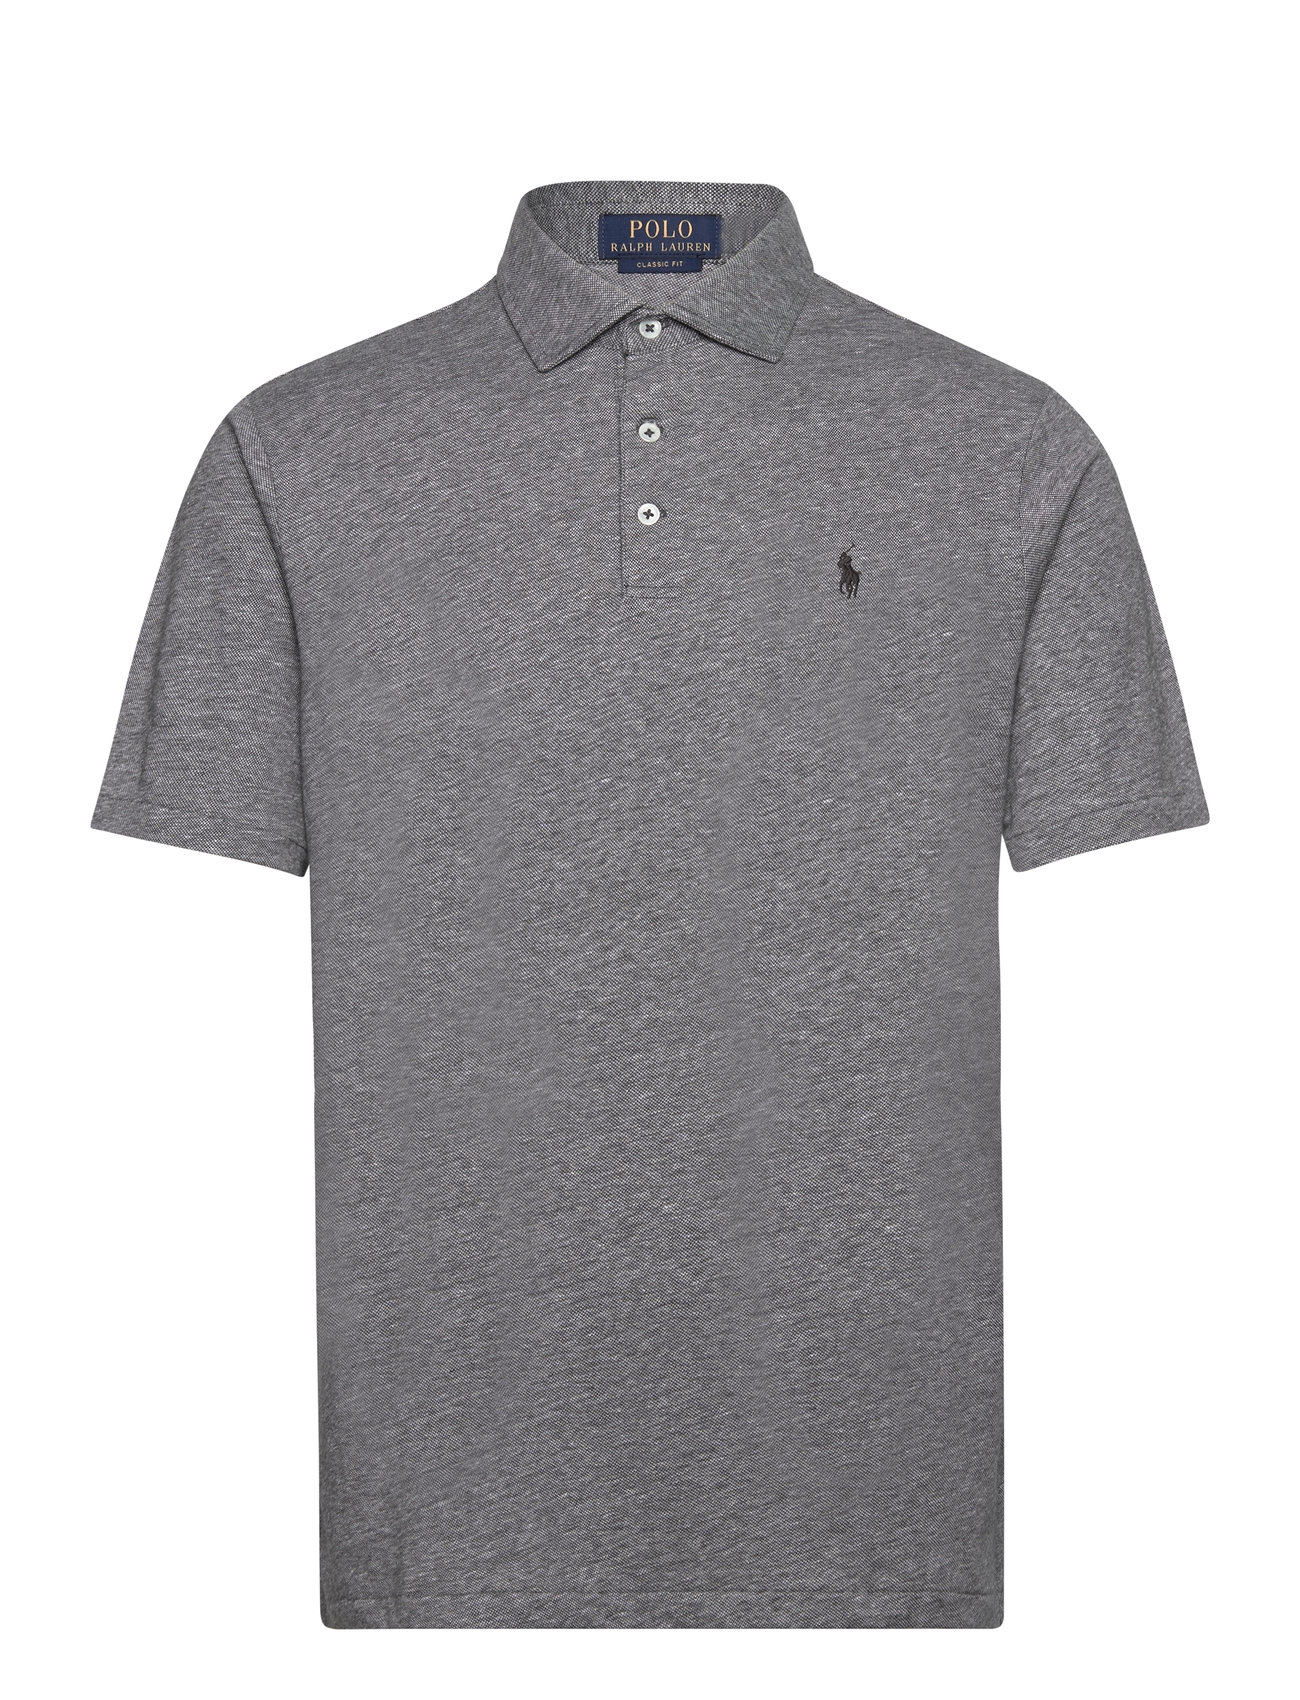 Classic Fit Cotton-Linen Mesh Polo Shirt Tops Polos Short-sleeved Grey Polo Ralph Lauren